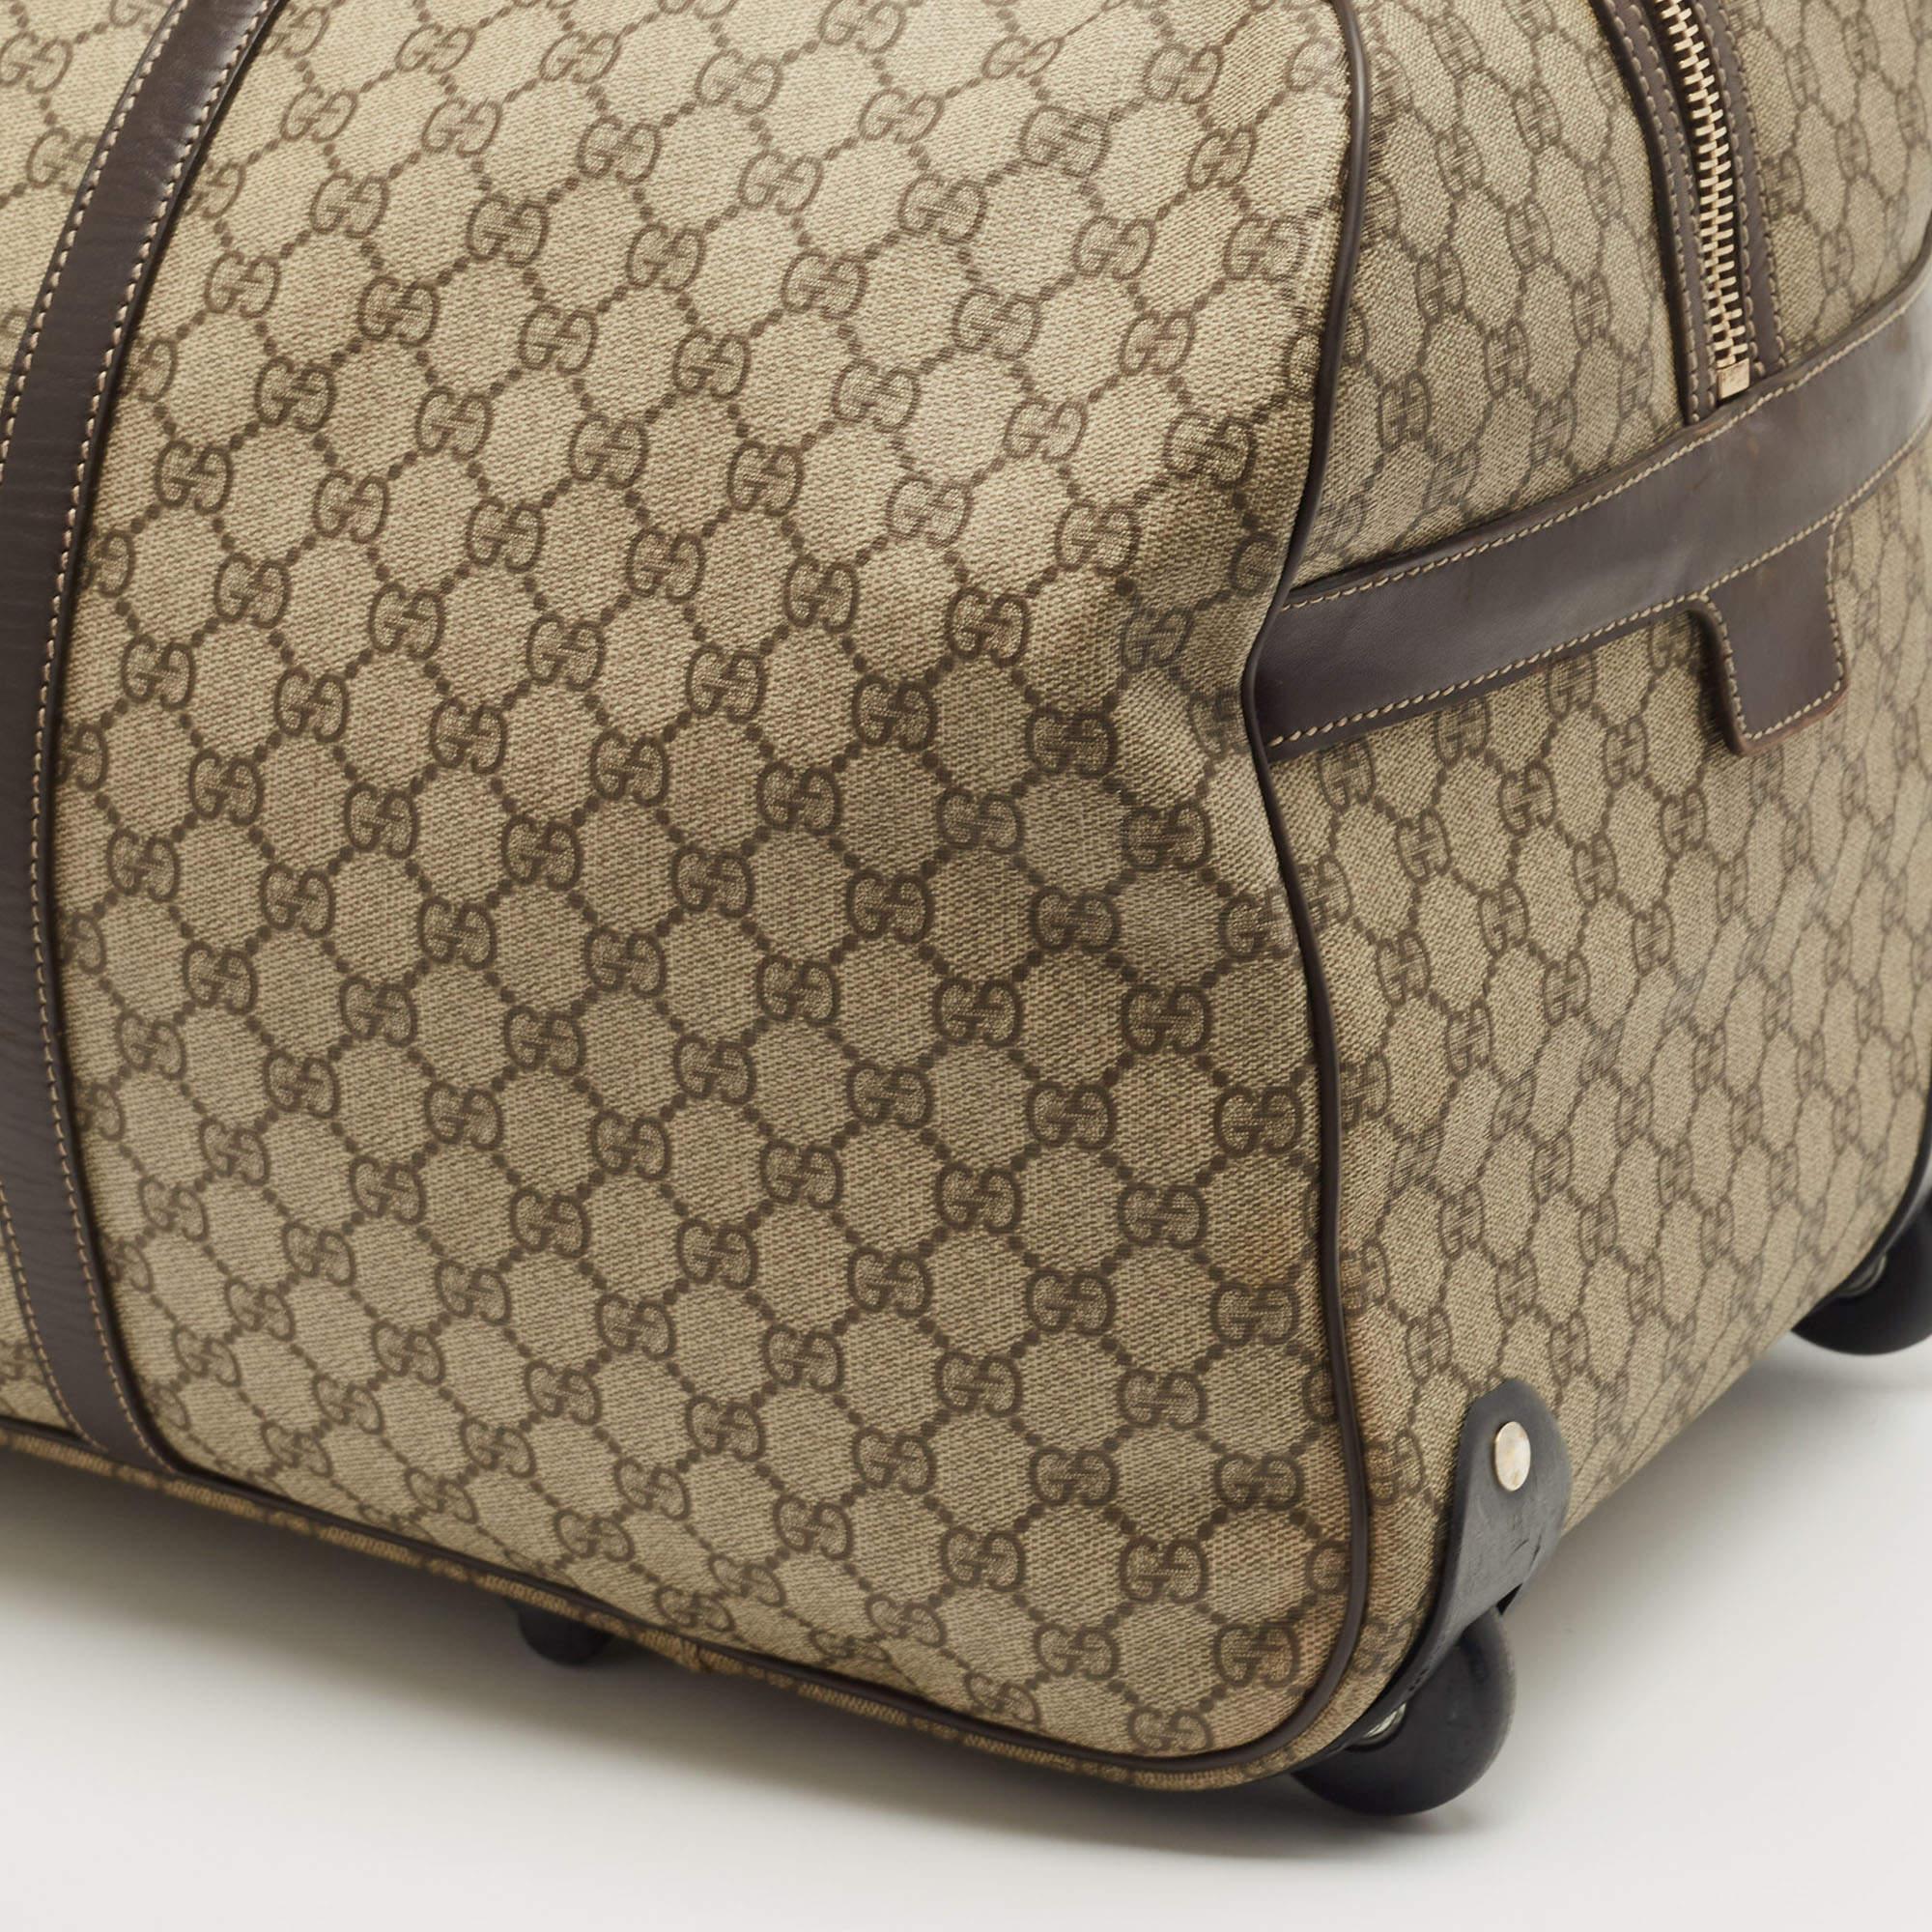 Gucci Dark Brown/Beige GG Supreme Canvas 2 Wheel Duffle Luggage Bag 2